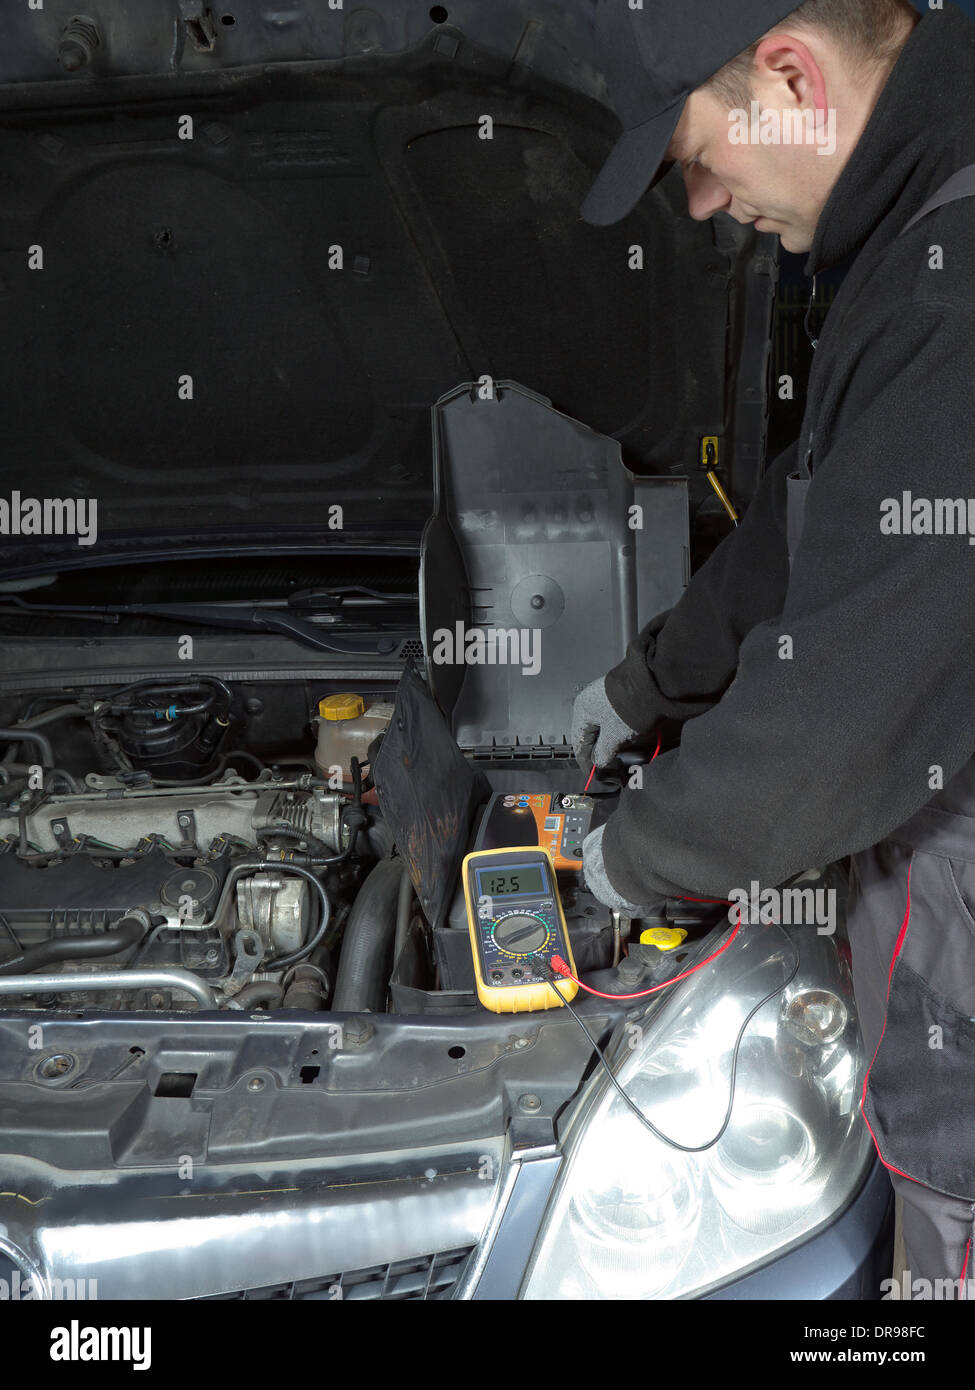 Auto mechanic measuring car battery voltage using multimeter Stock Photo